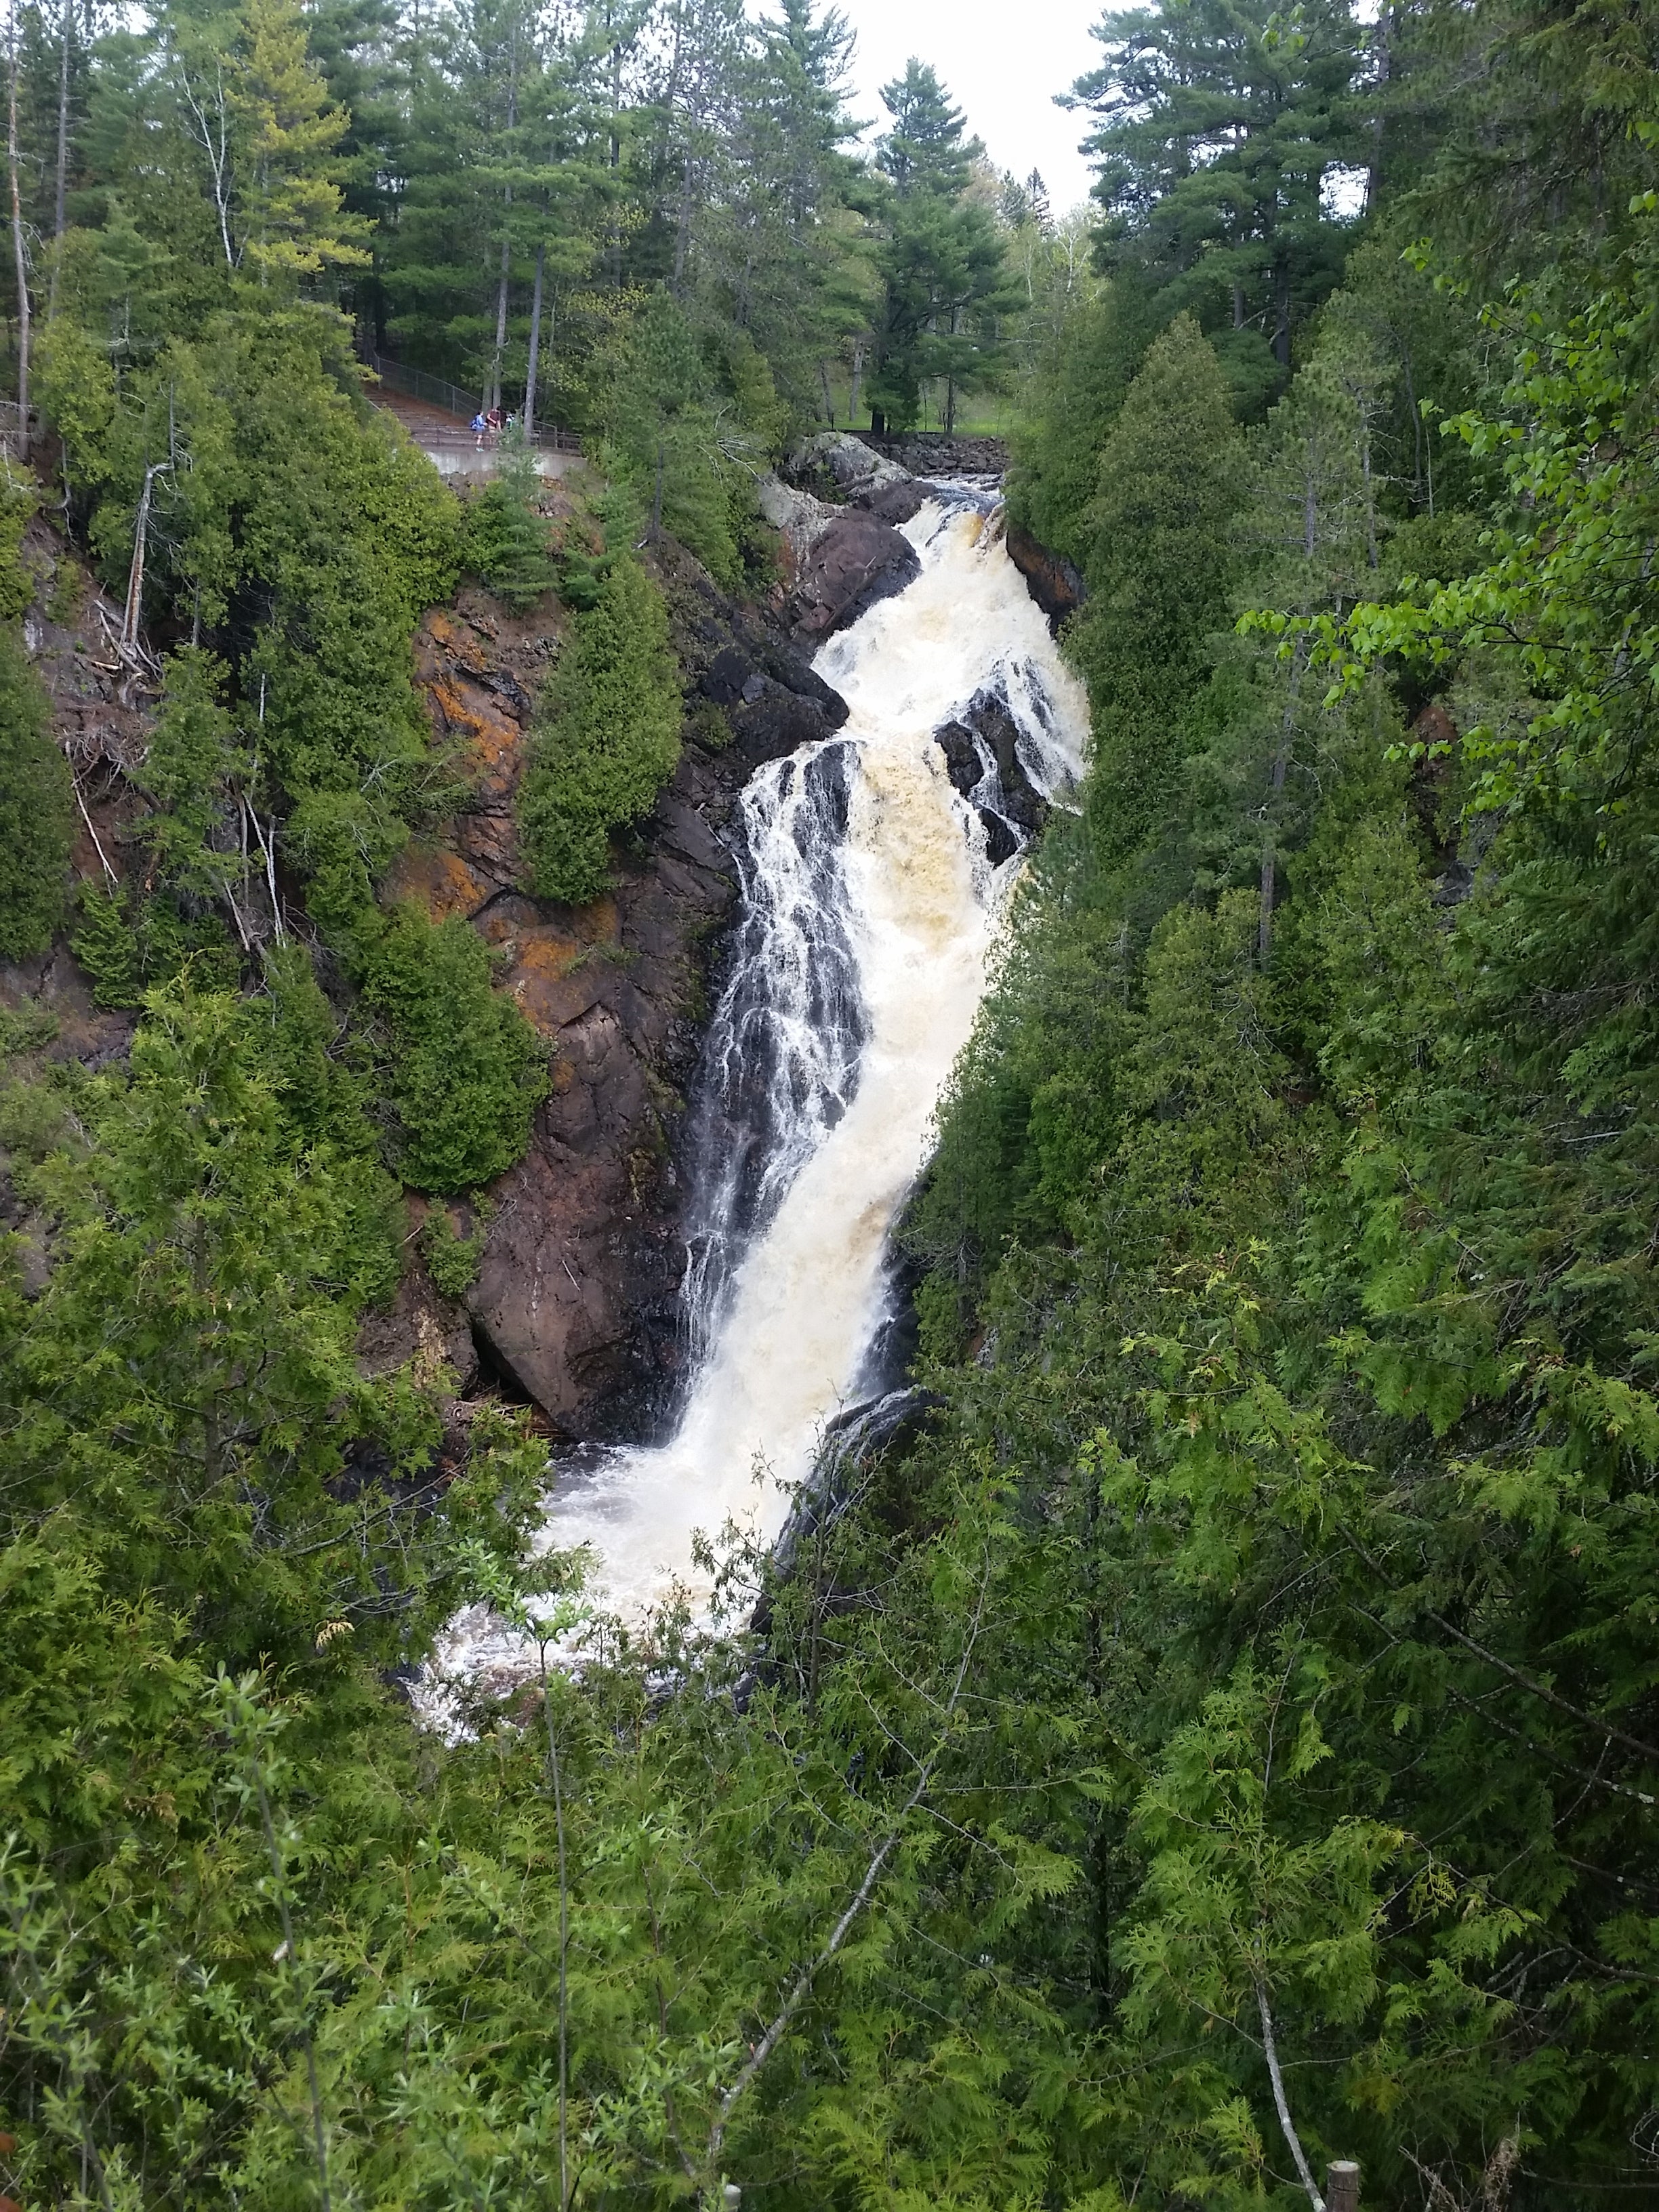 Big Manitou Falls 165 feet high